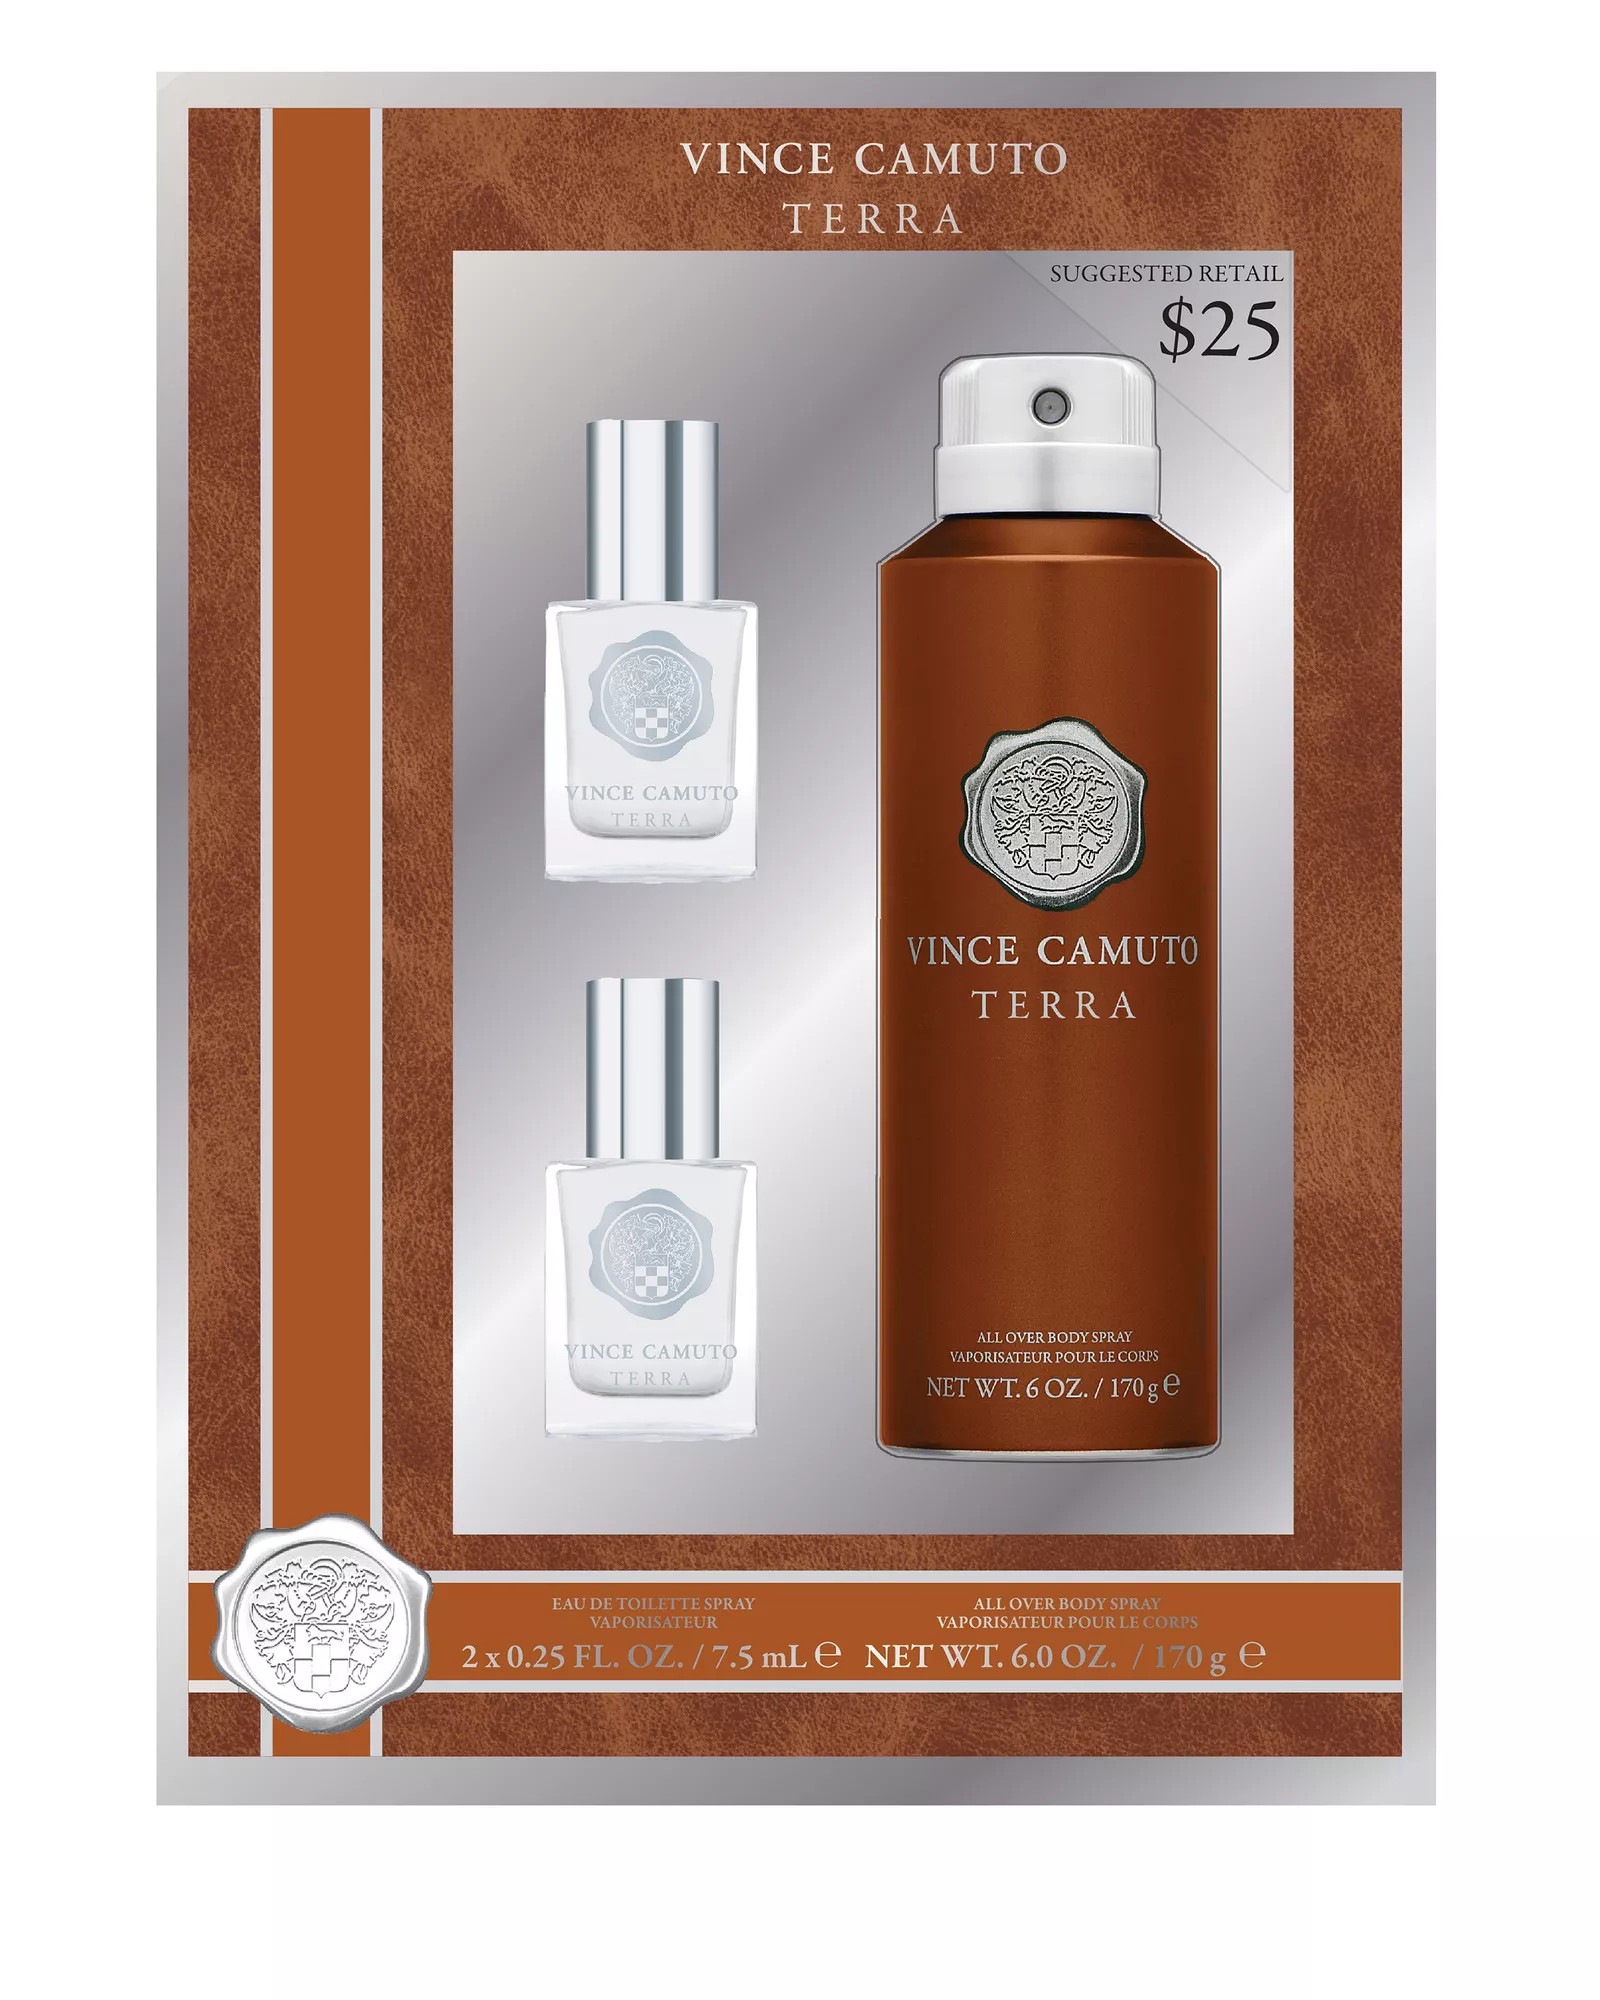 Vince Camuto TERRA Deodorant Alcohol-Free Stick Men Fragrance 2.5 oz/.71g  New